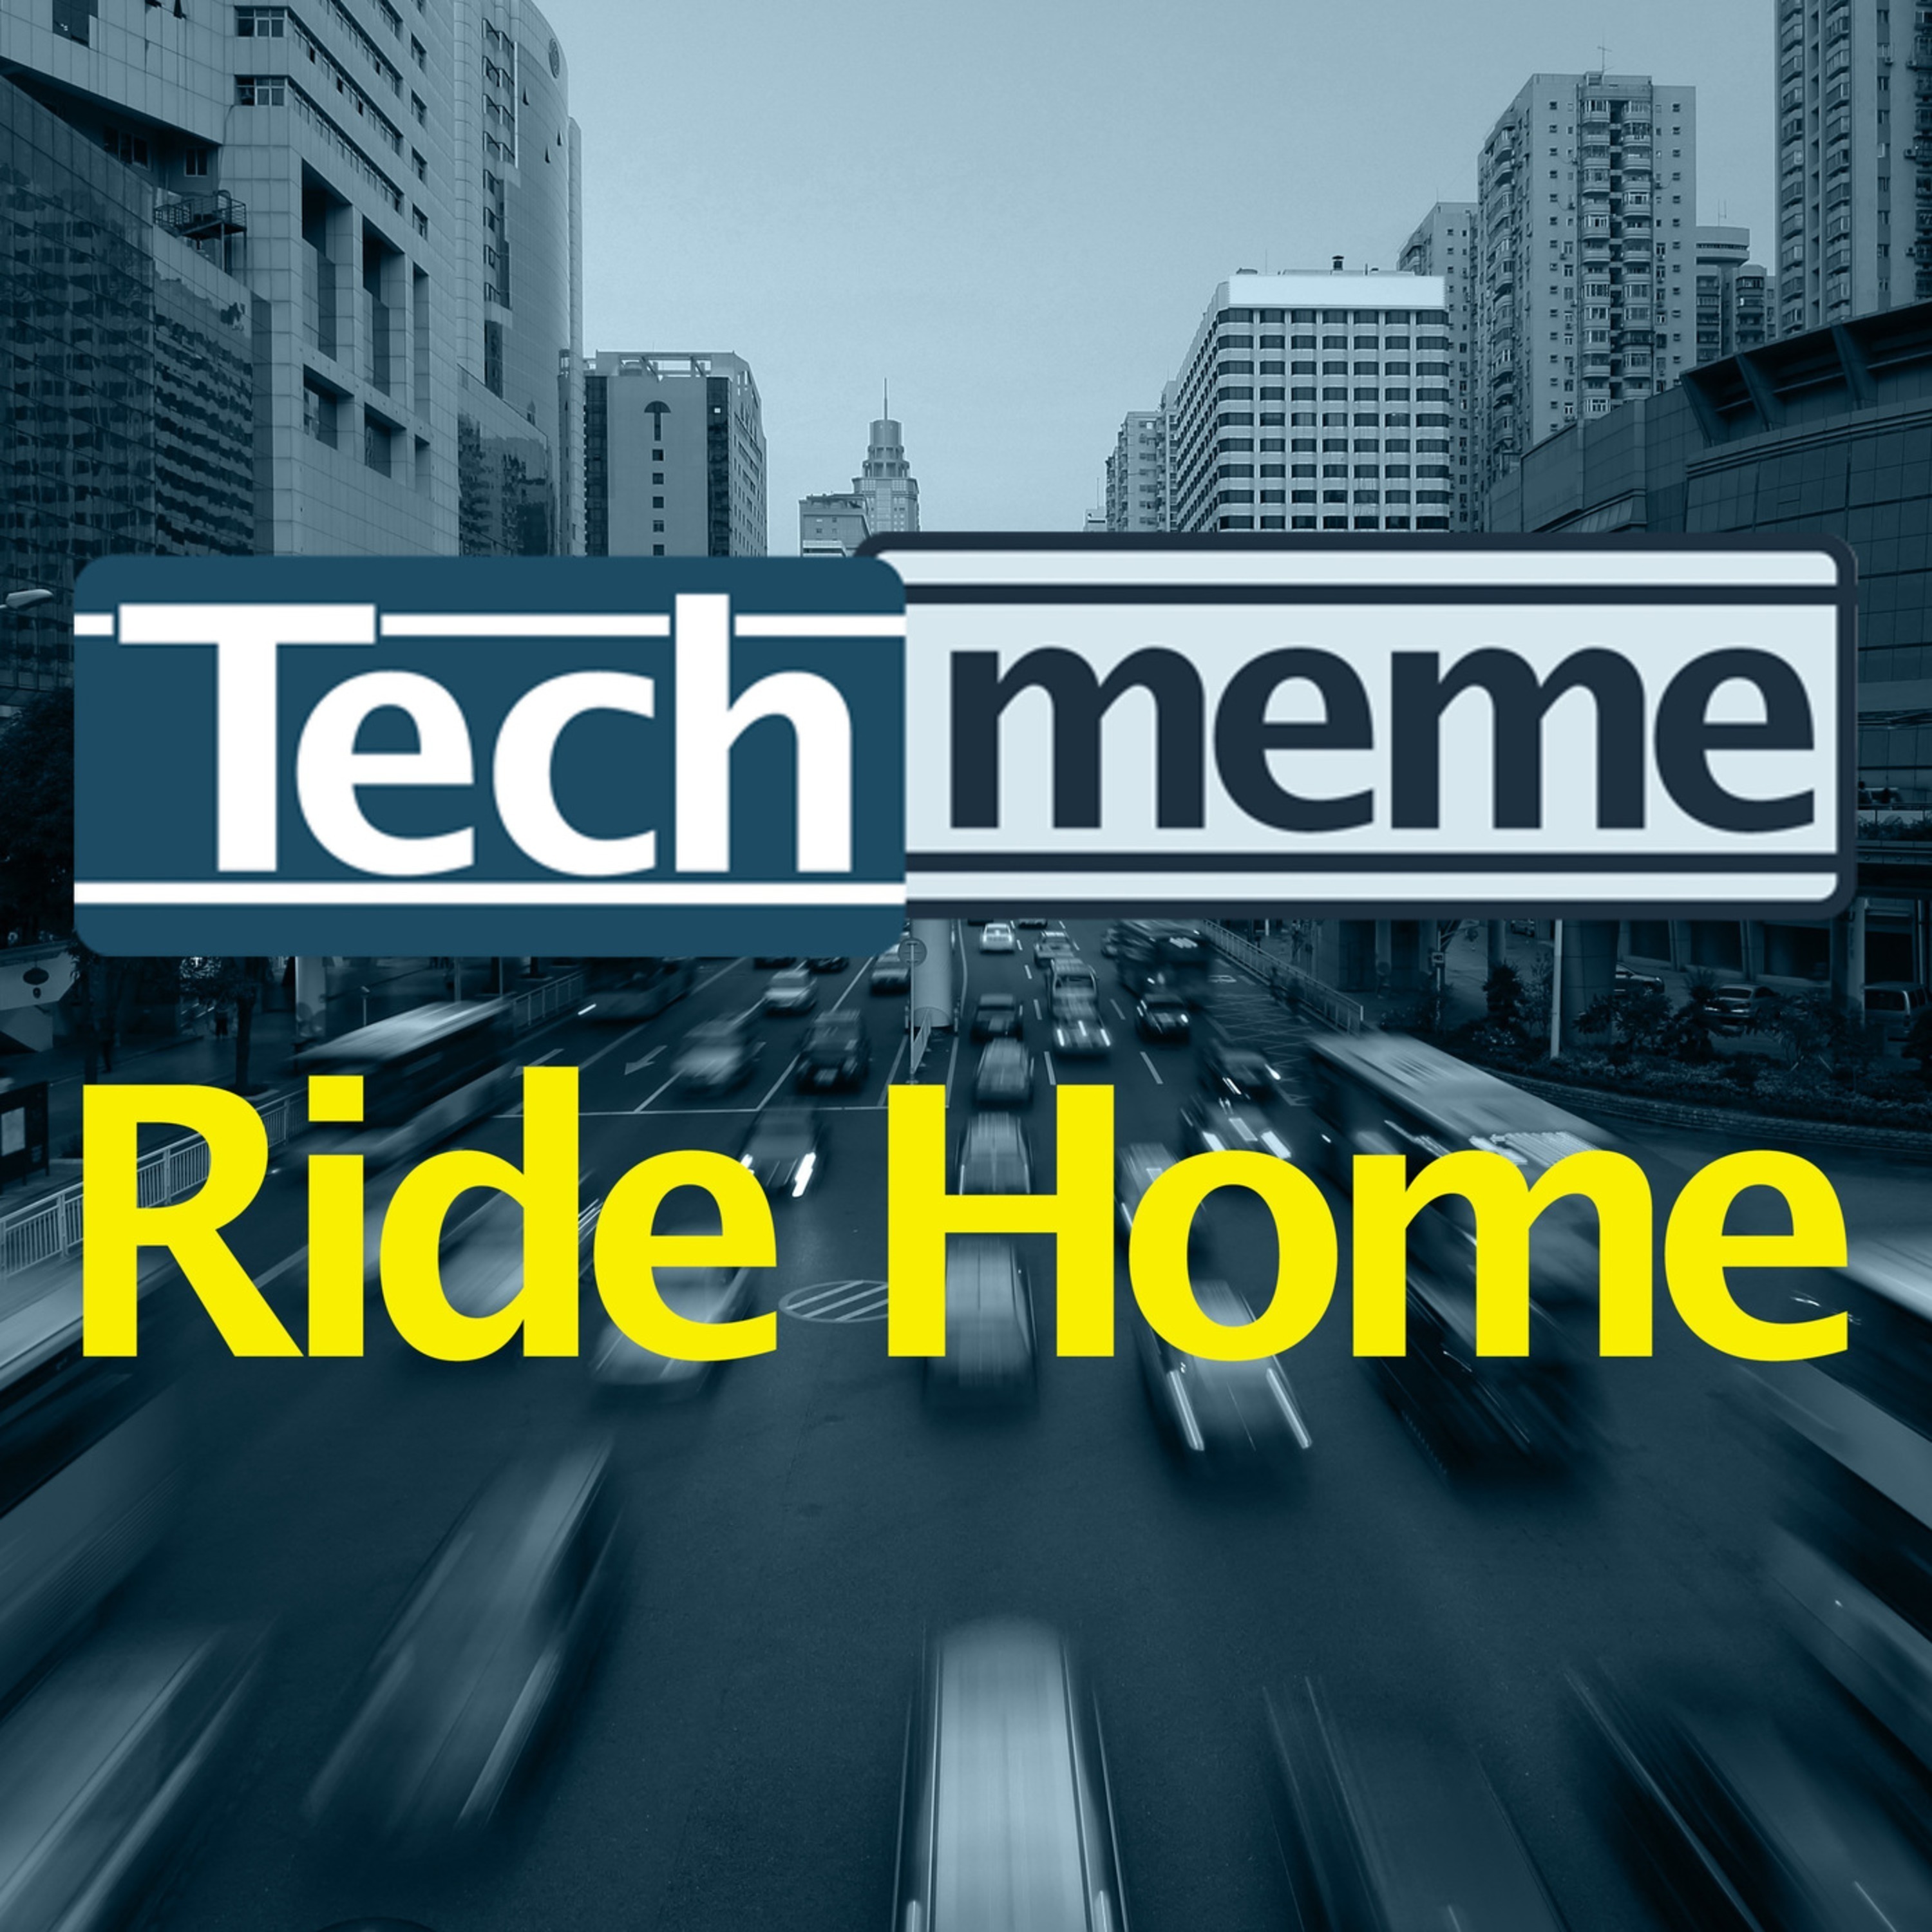 Techmeme Ride Home - a16z’s Media Play; Stripe As King Of Kommerce